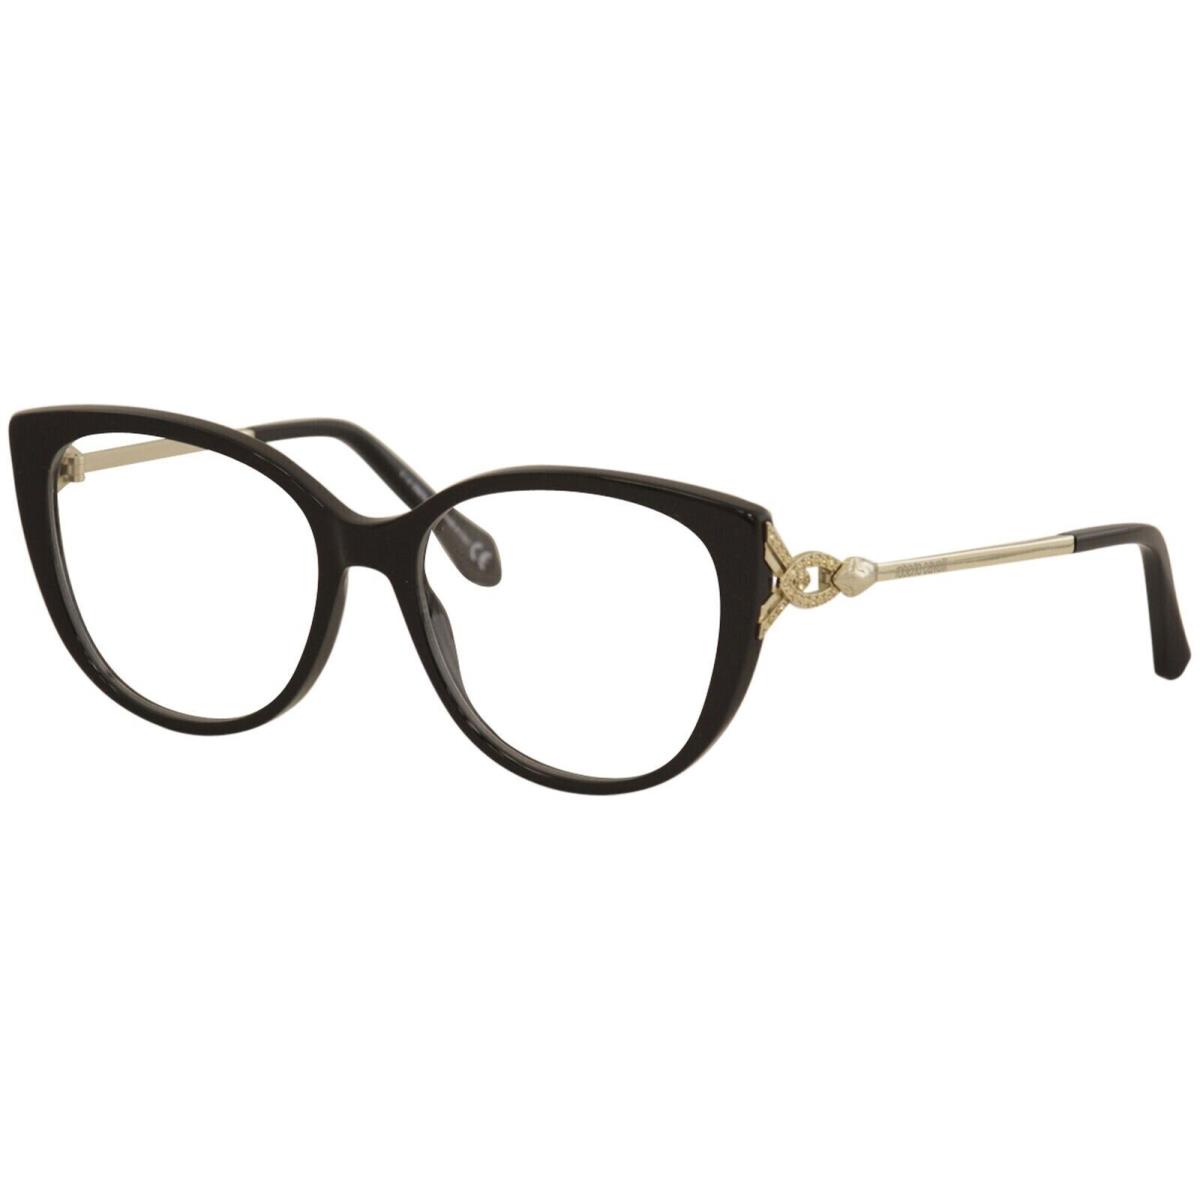 Roberto Cavalli Eyeglasses RC5053 001 Black Full Rim Frame 53MM Rx-able